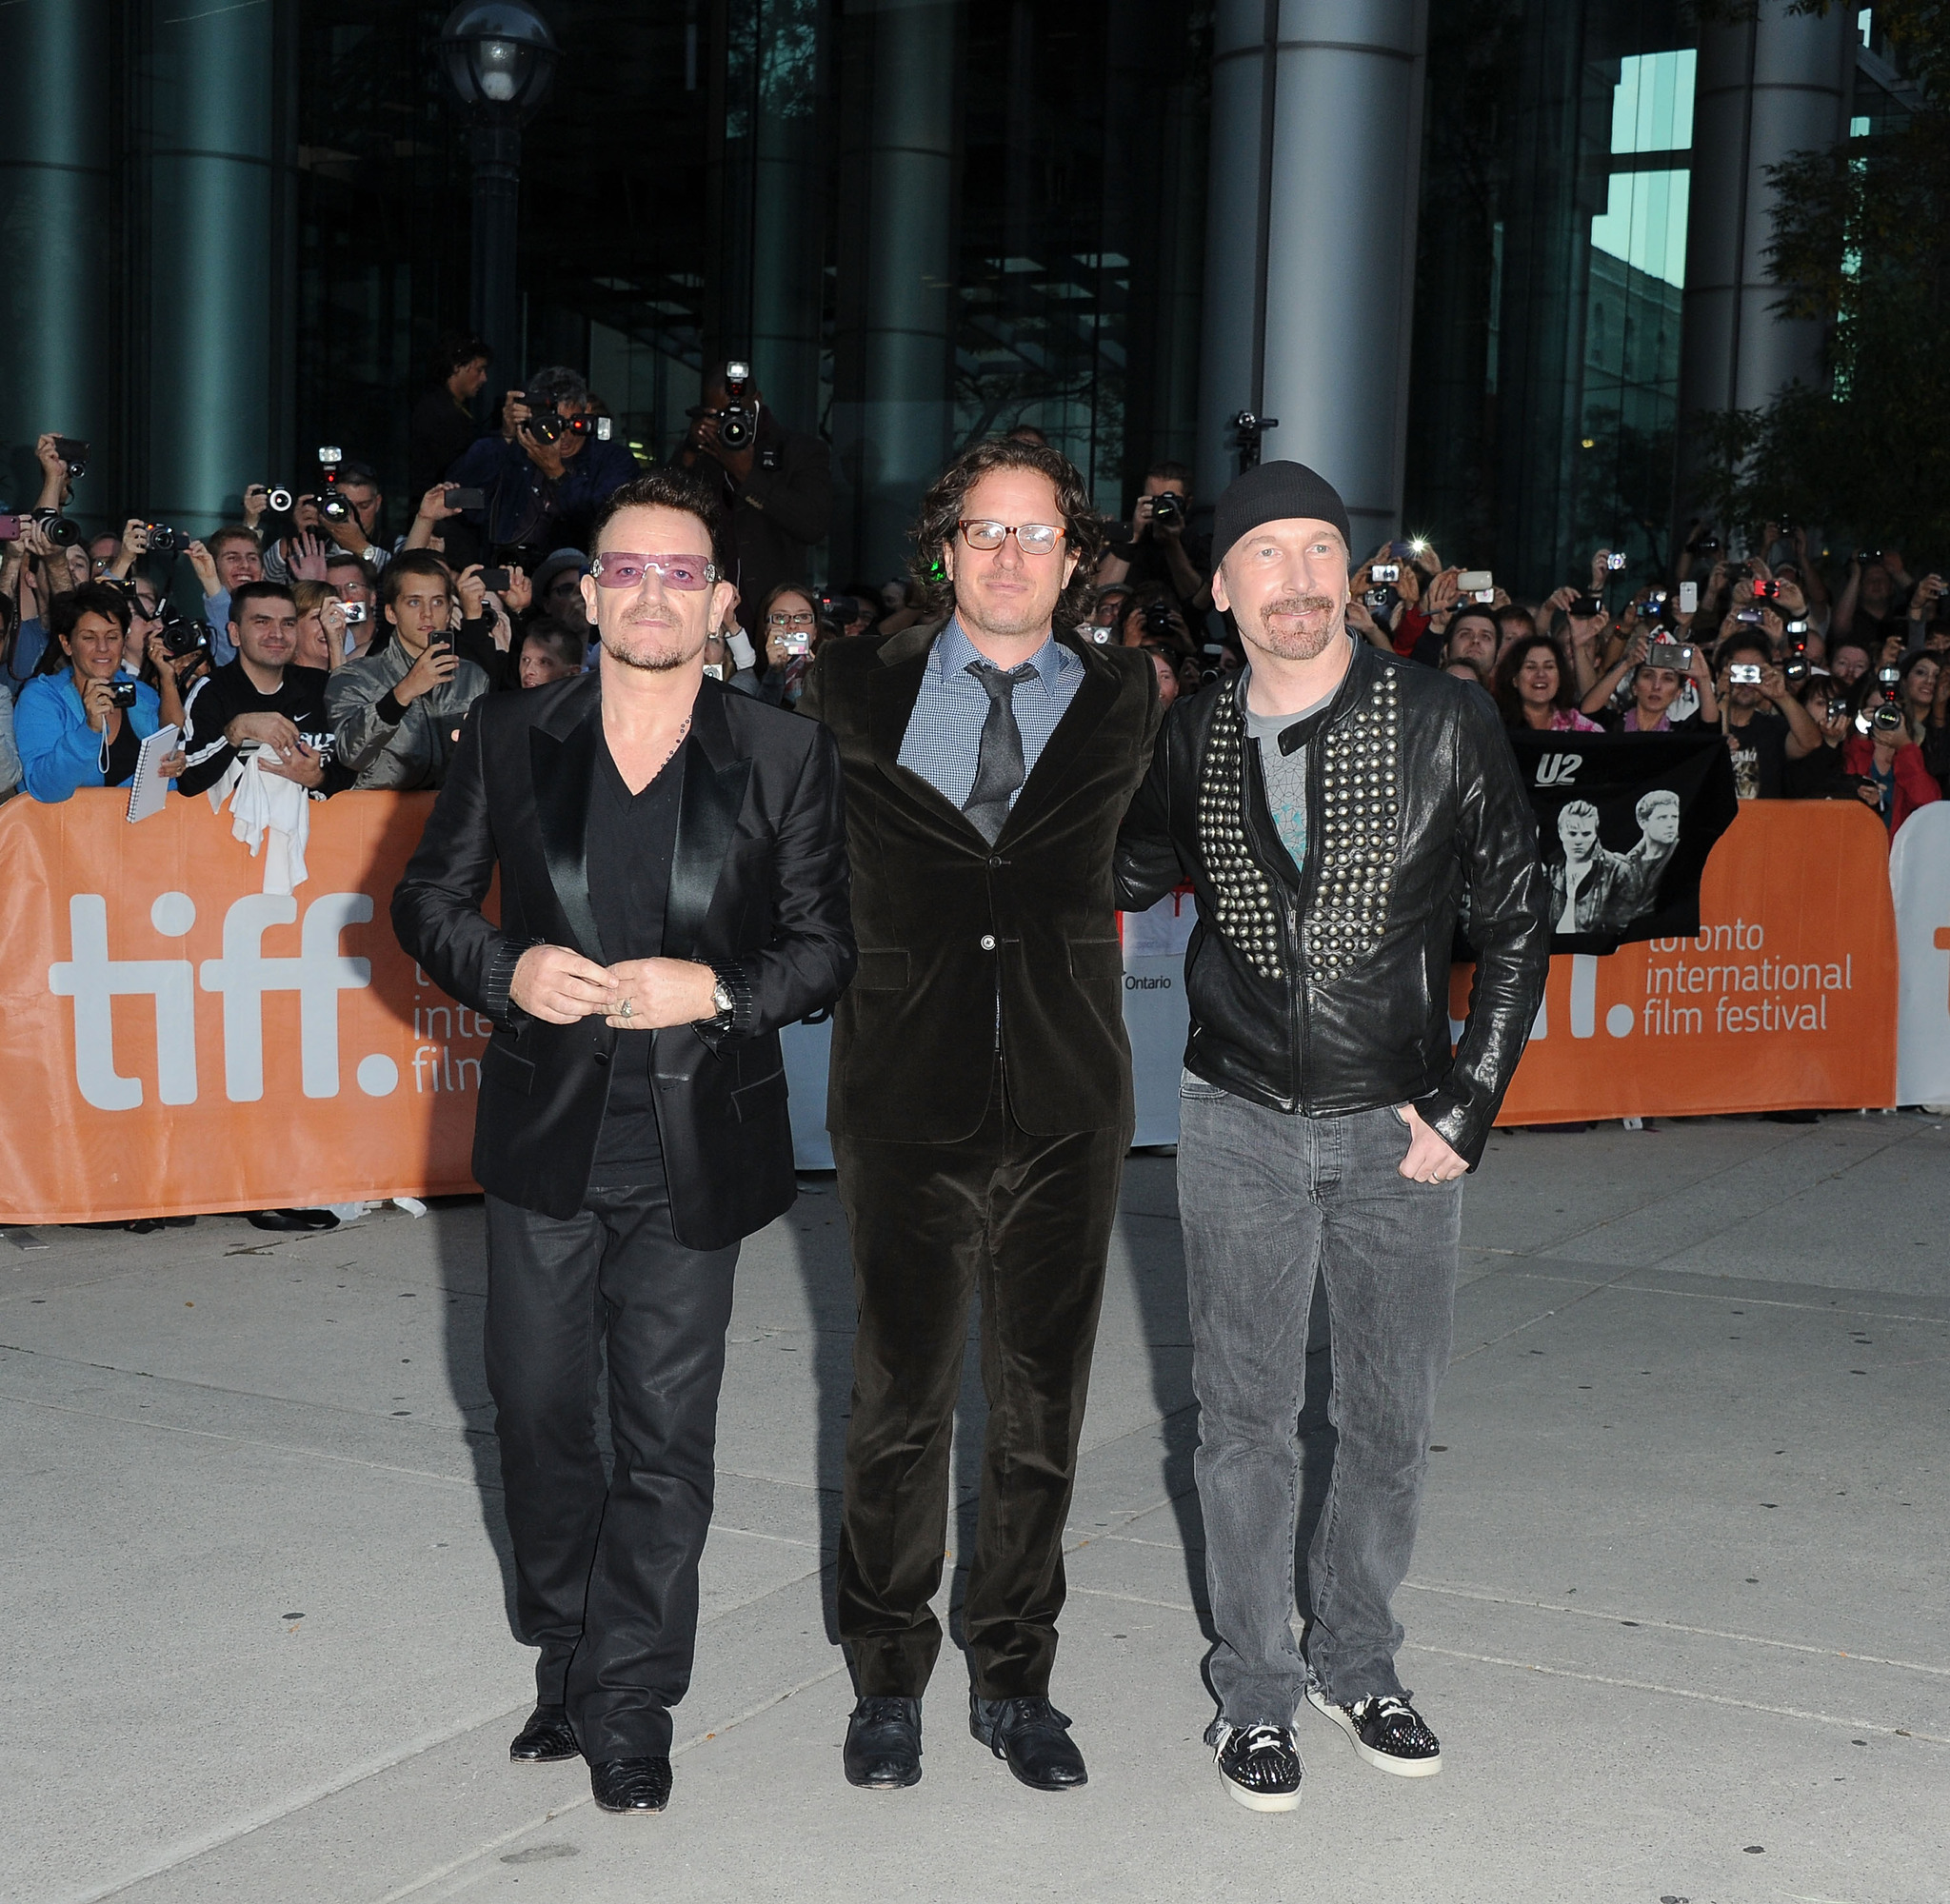 Bono, Davis Guggenheim and The Edge